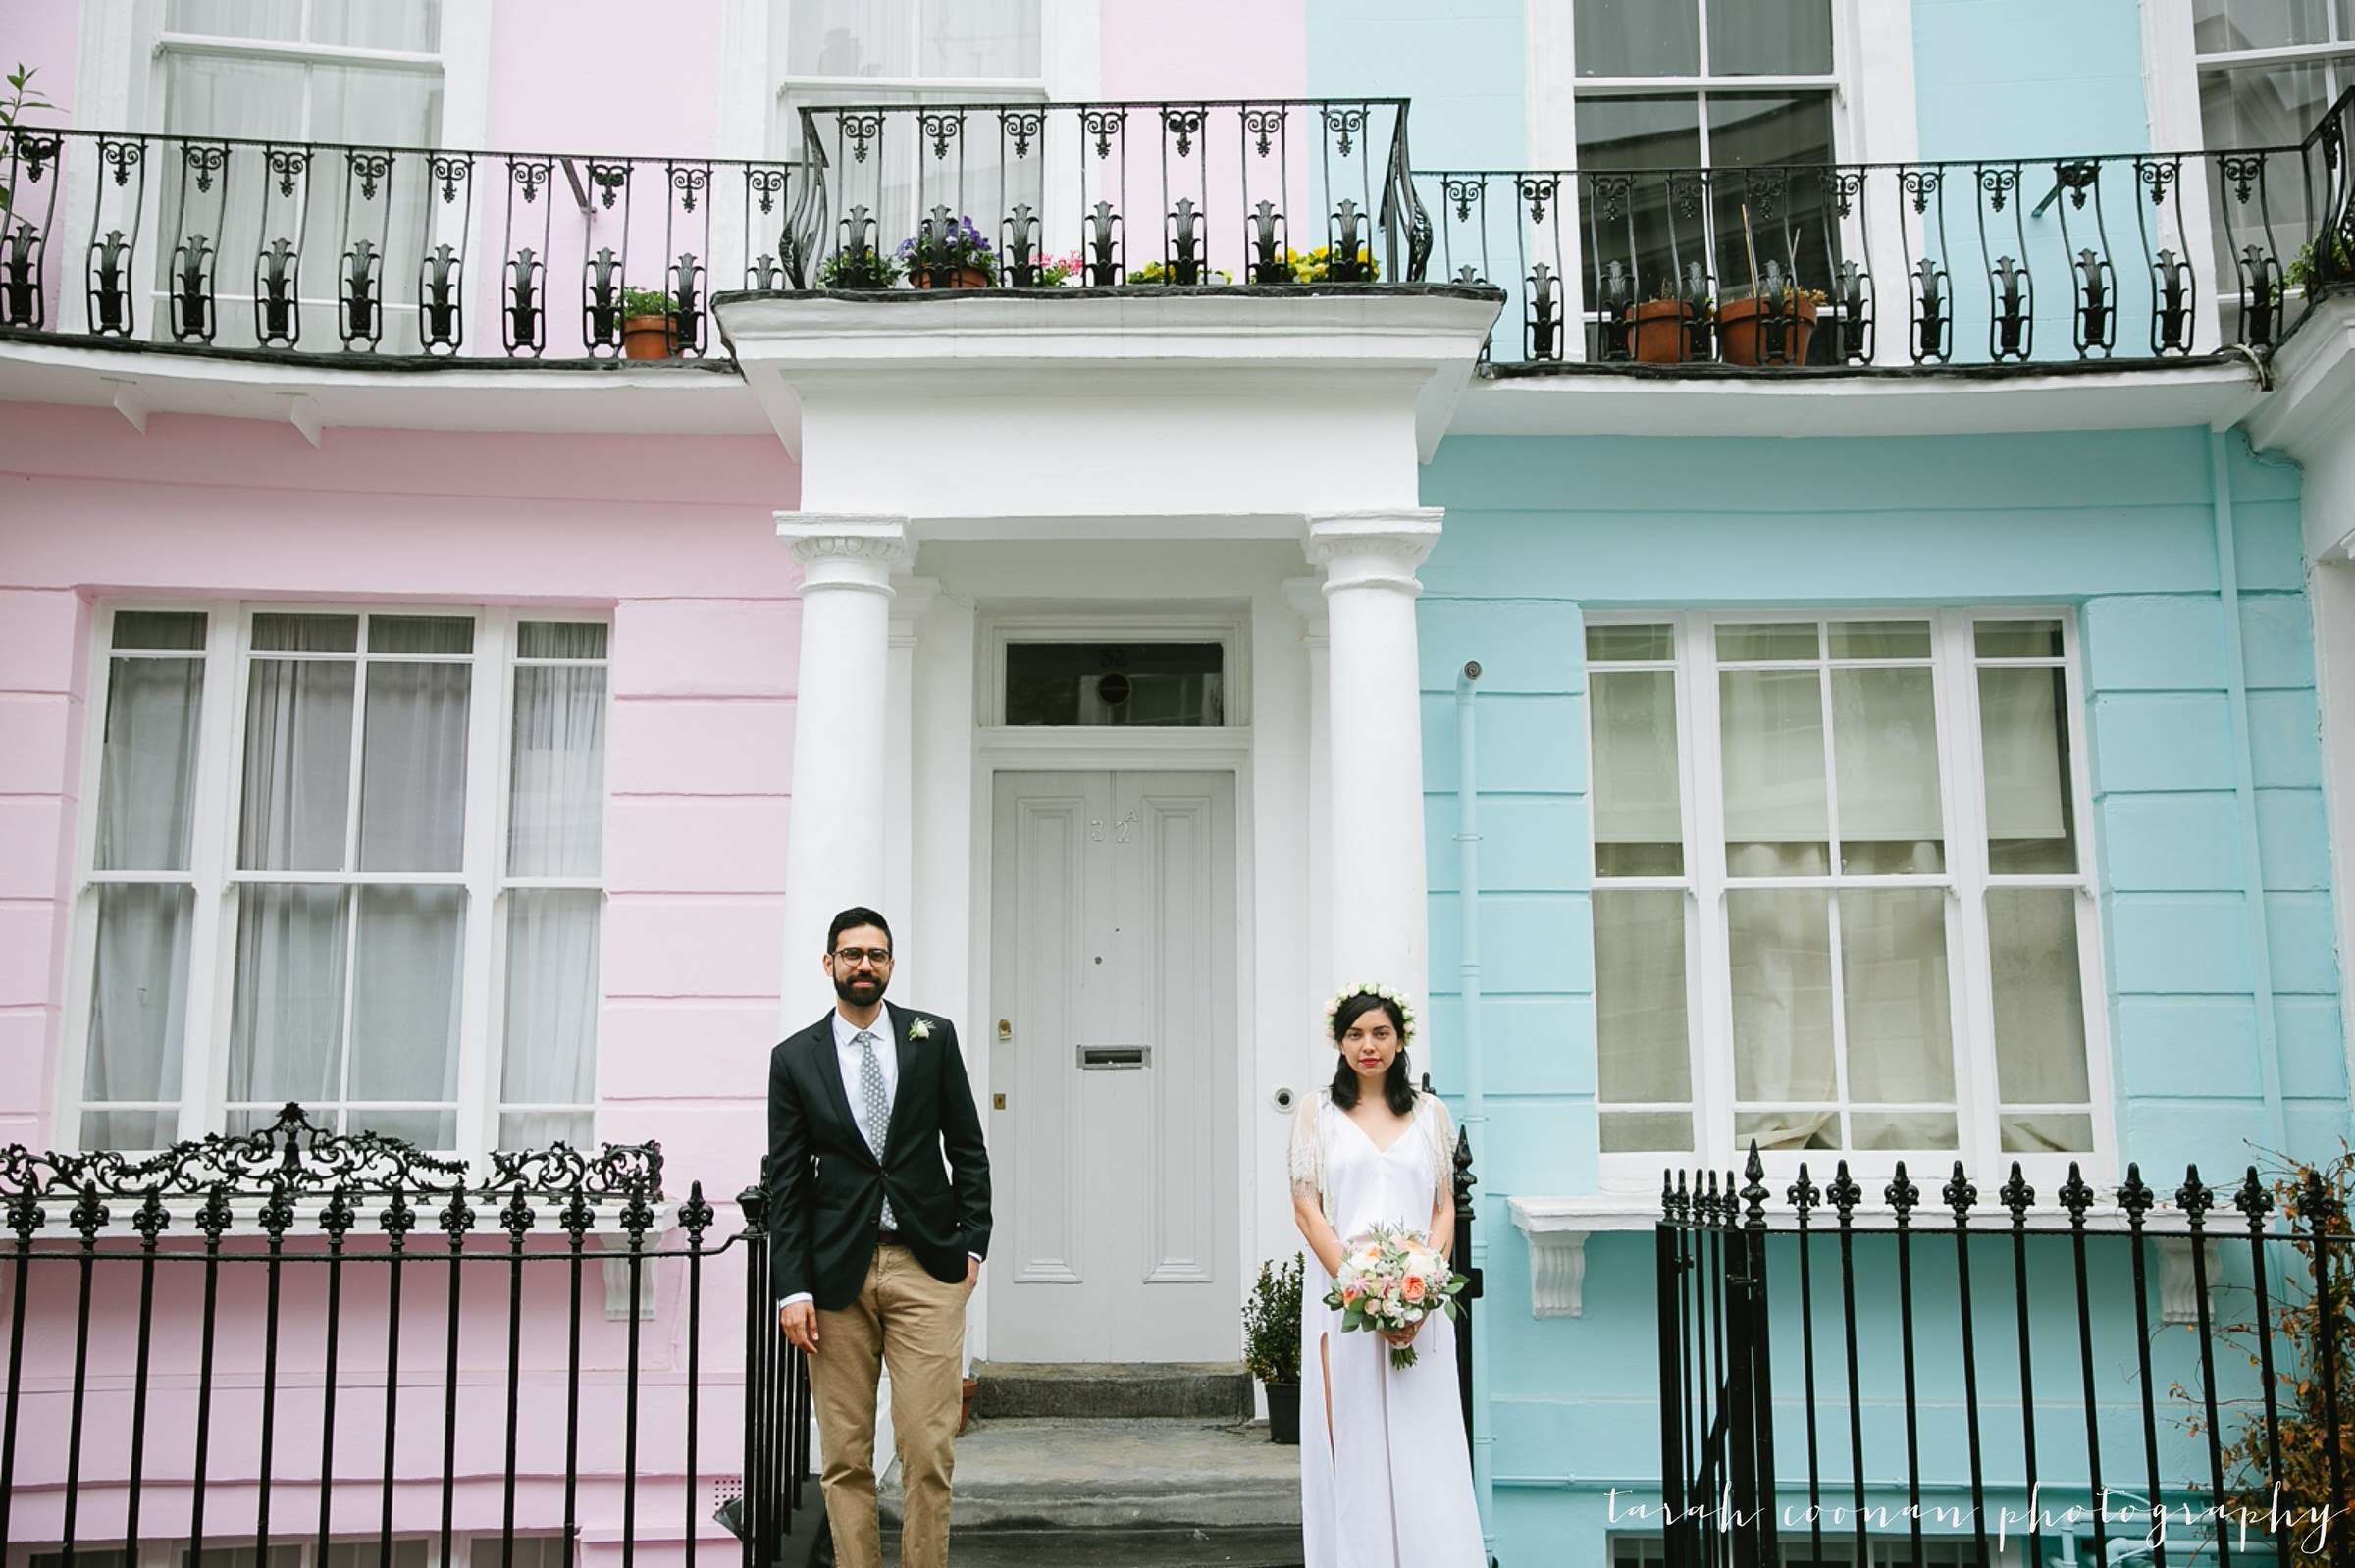 pastel houses london